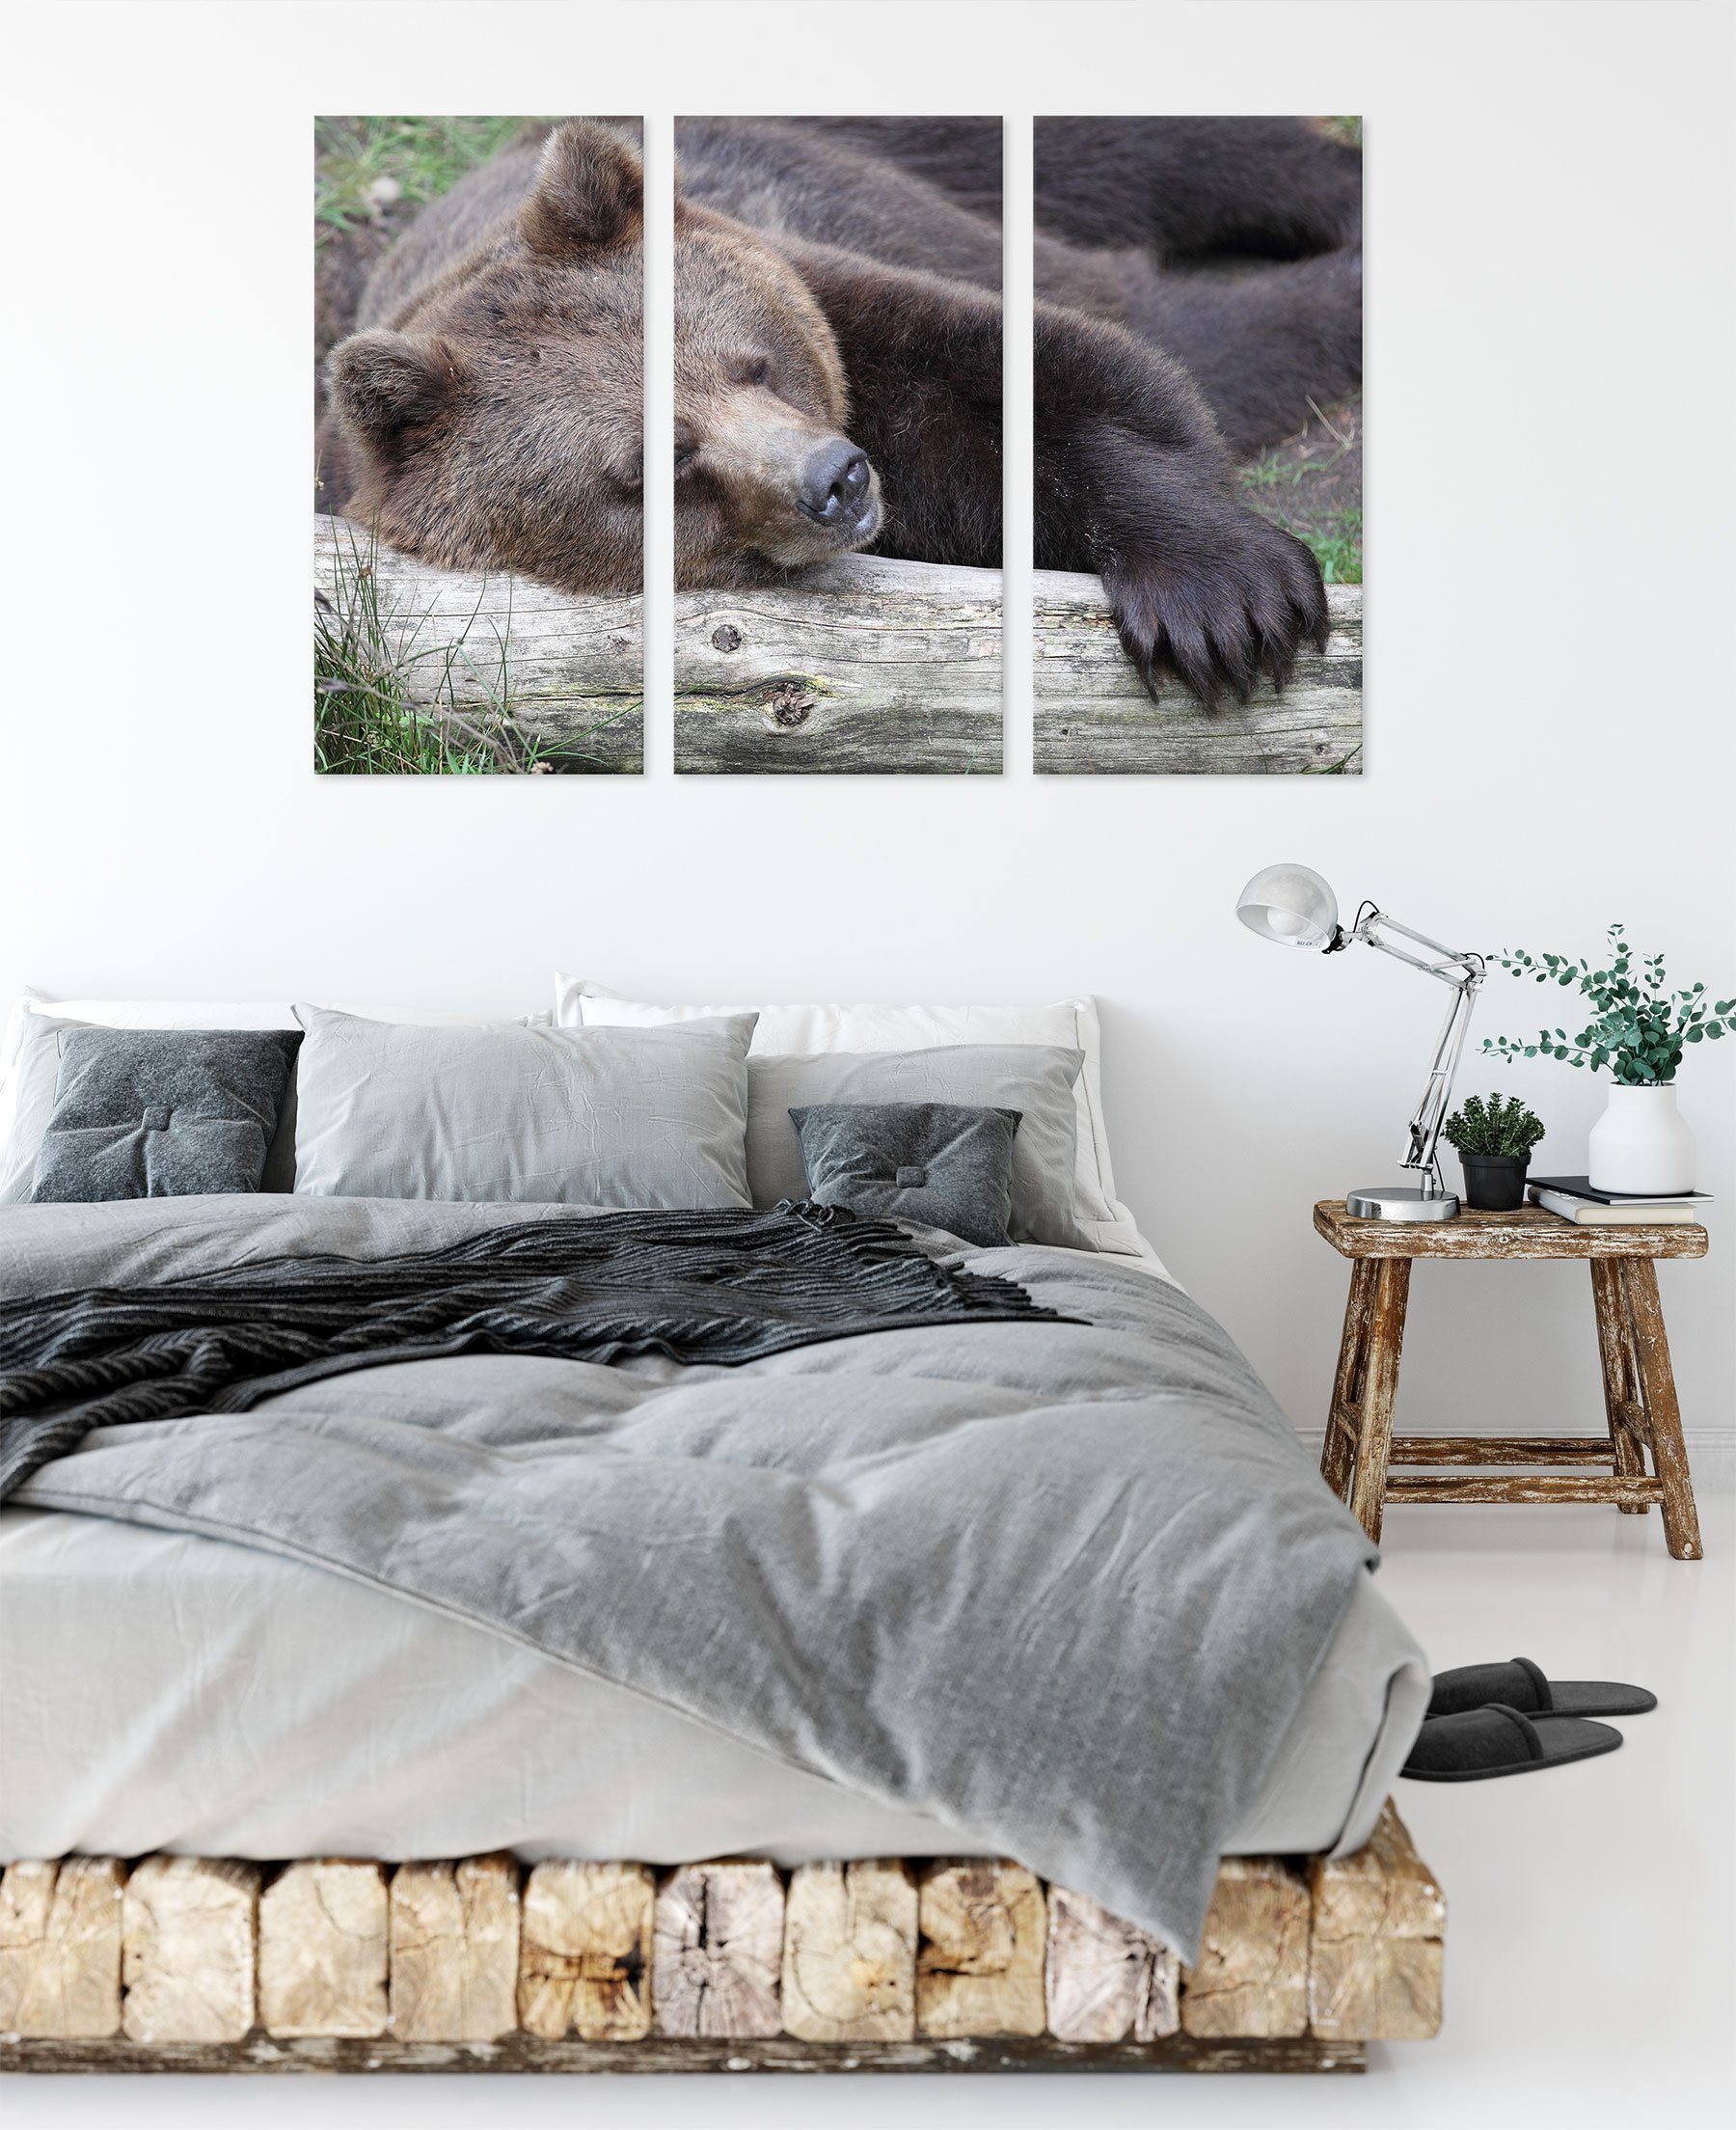 Pixxprint Leinwandbild Bär schläft auf auf St), inkl. Bär Baumstamm, fertig bespannt, (1 schläft Zackenaufhänger Baumstamm (120x80cm) 3Teiler Leinwandbild